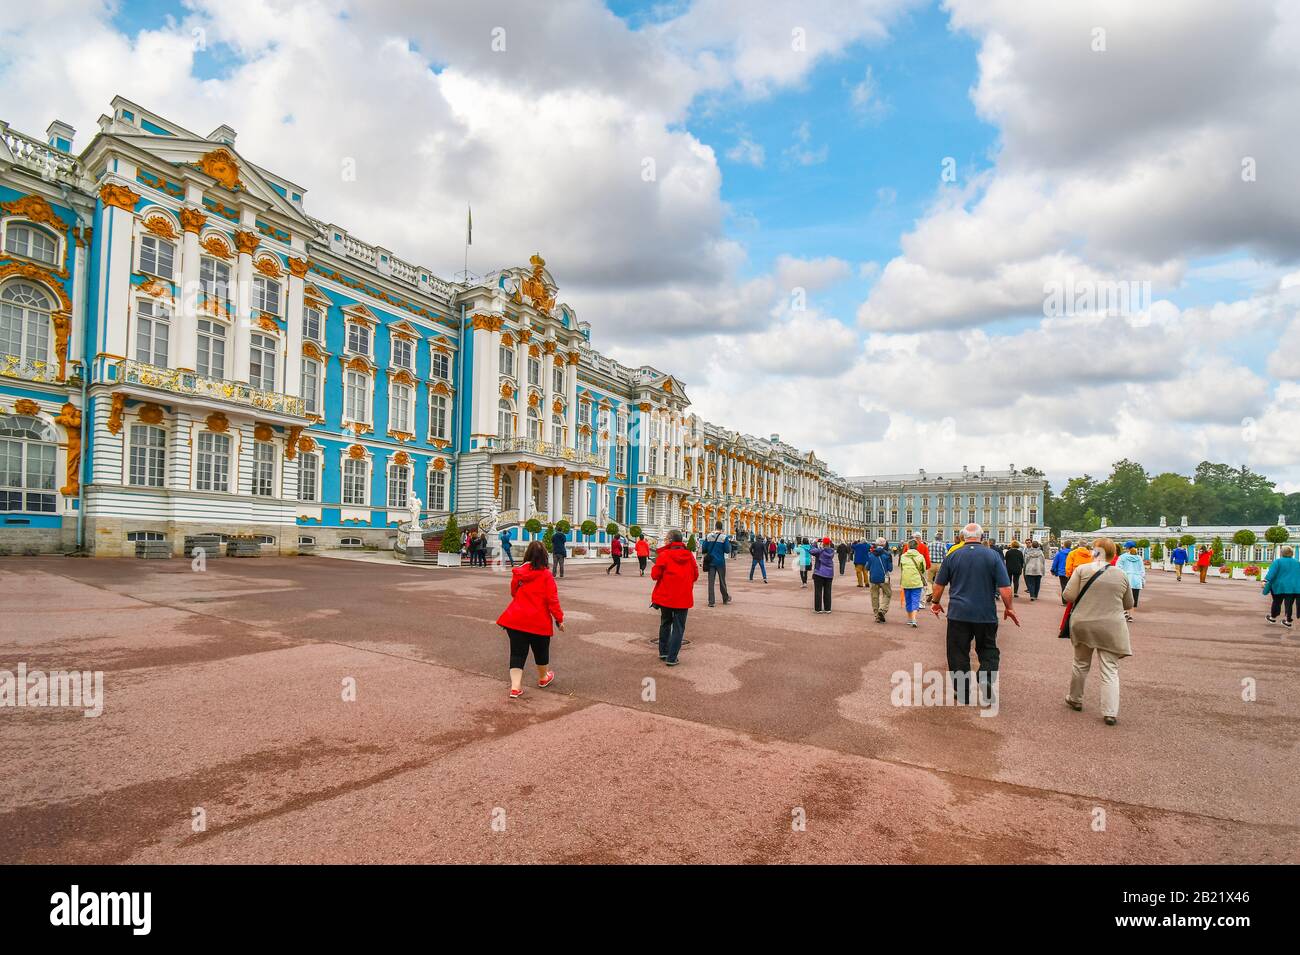 Tourists walk across the large promenade in between Catherine Palace and Gardens in Tsarskoye Selo, Pushkin, near St. Petersburg, Russia. Stock Photo